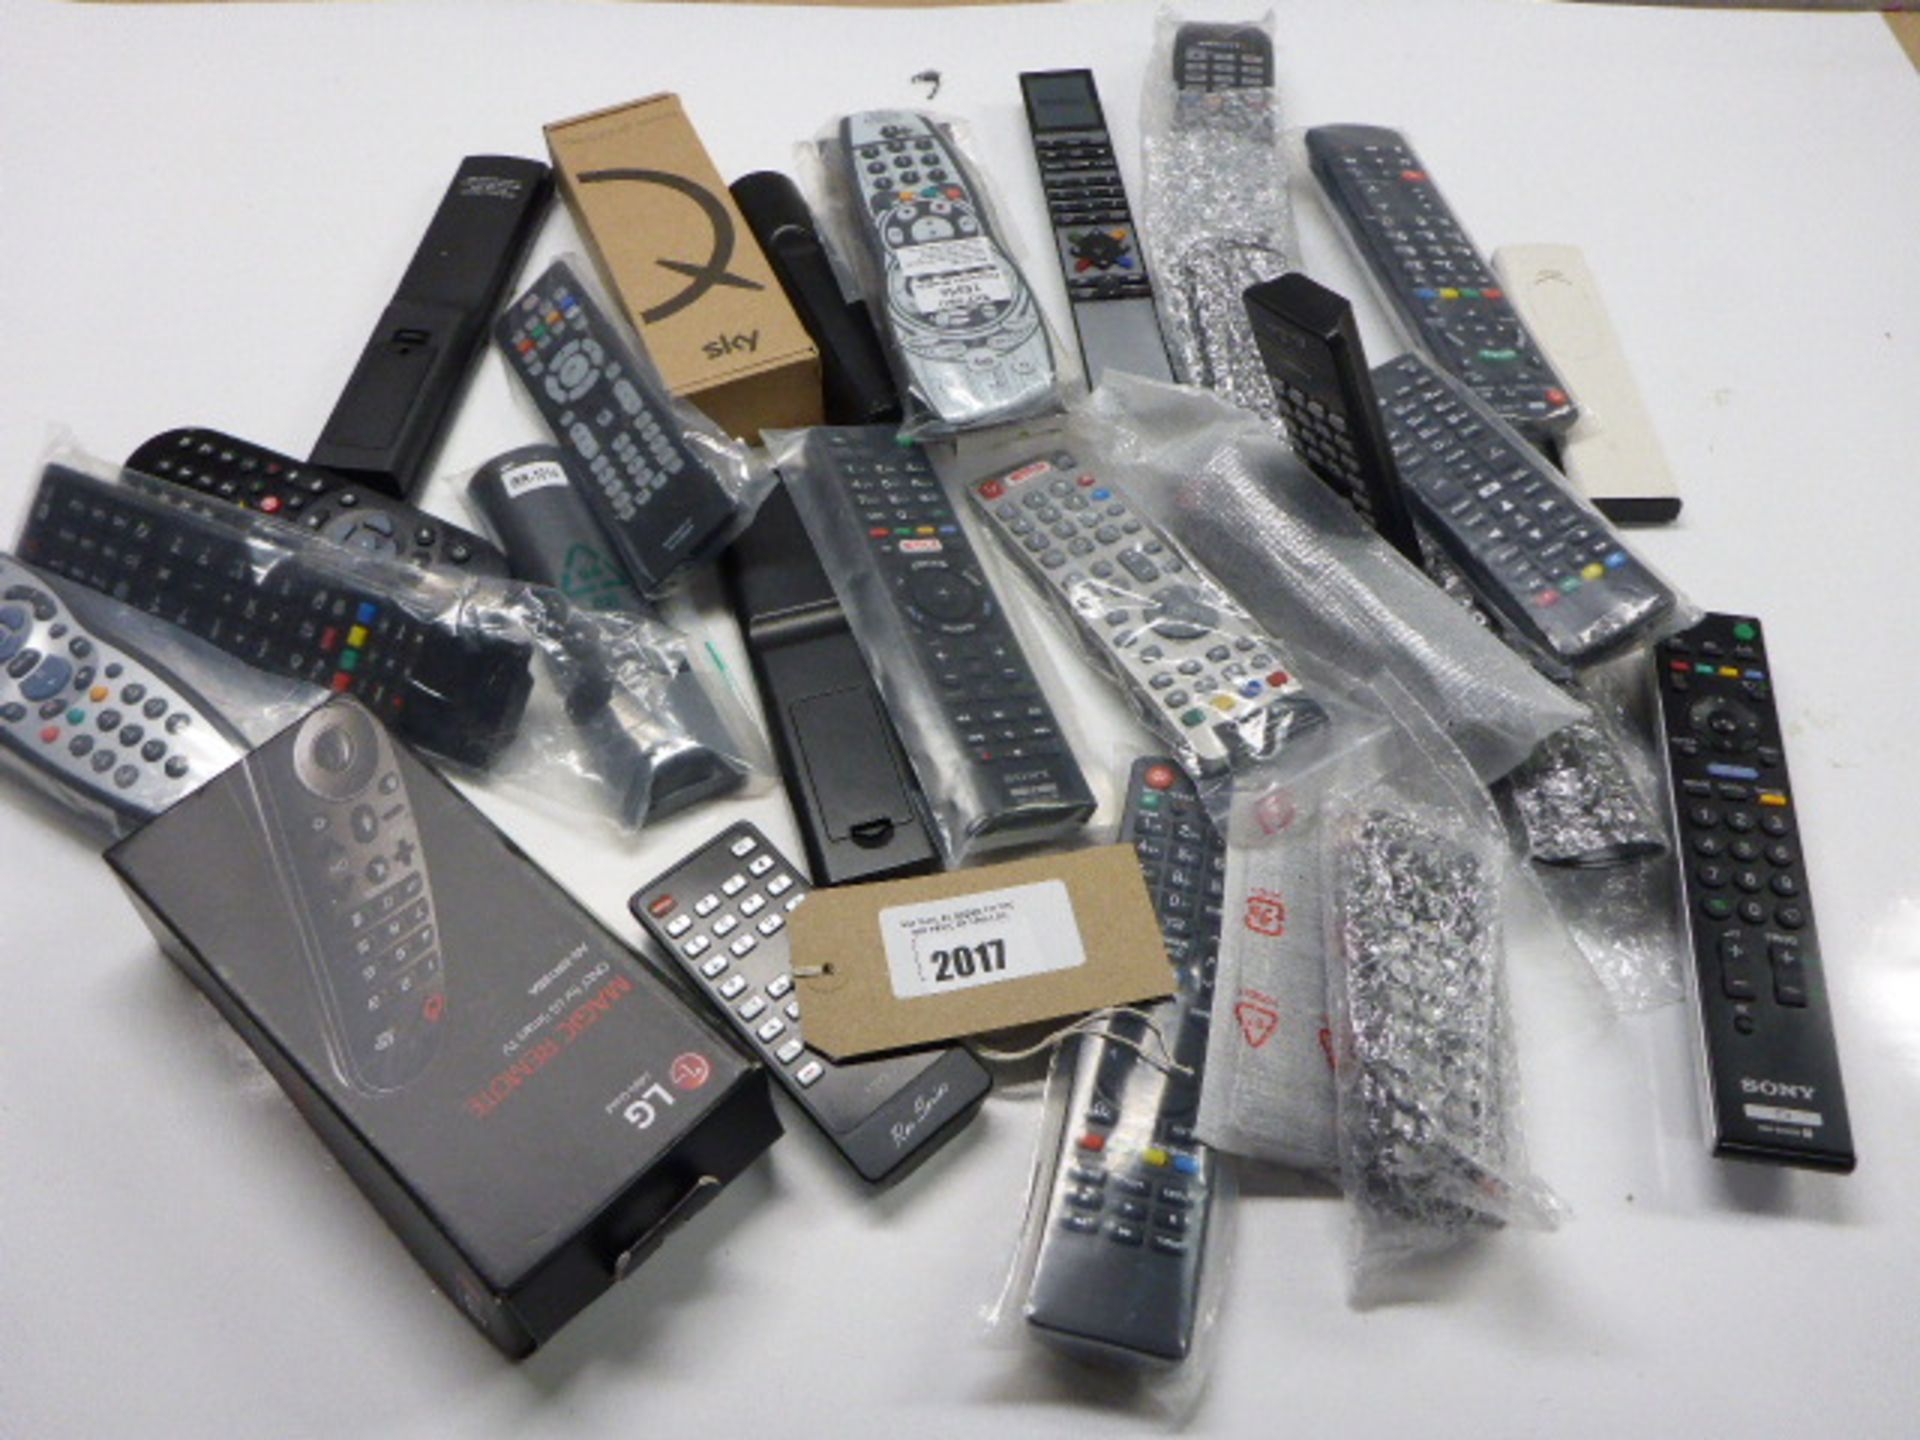 Bag containing quantity of remote controls